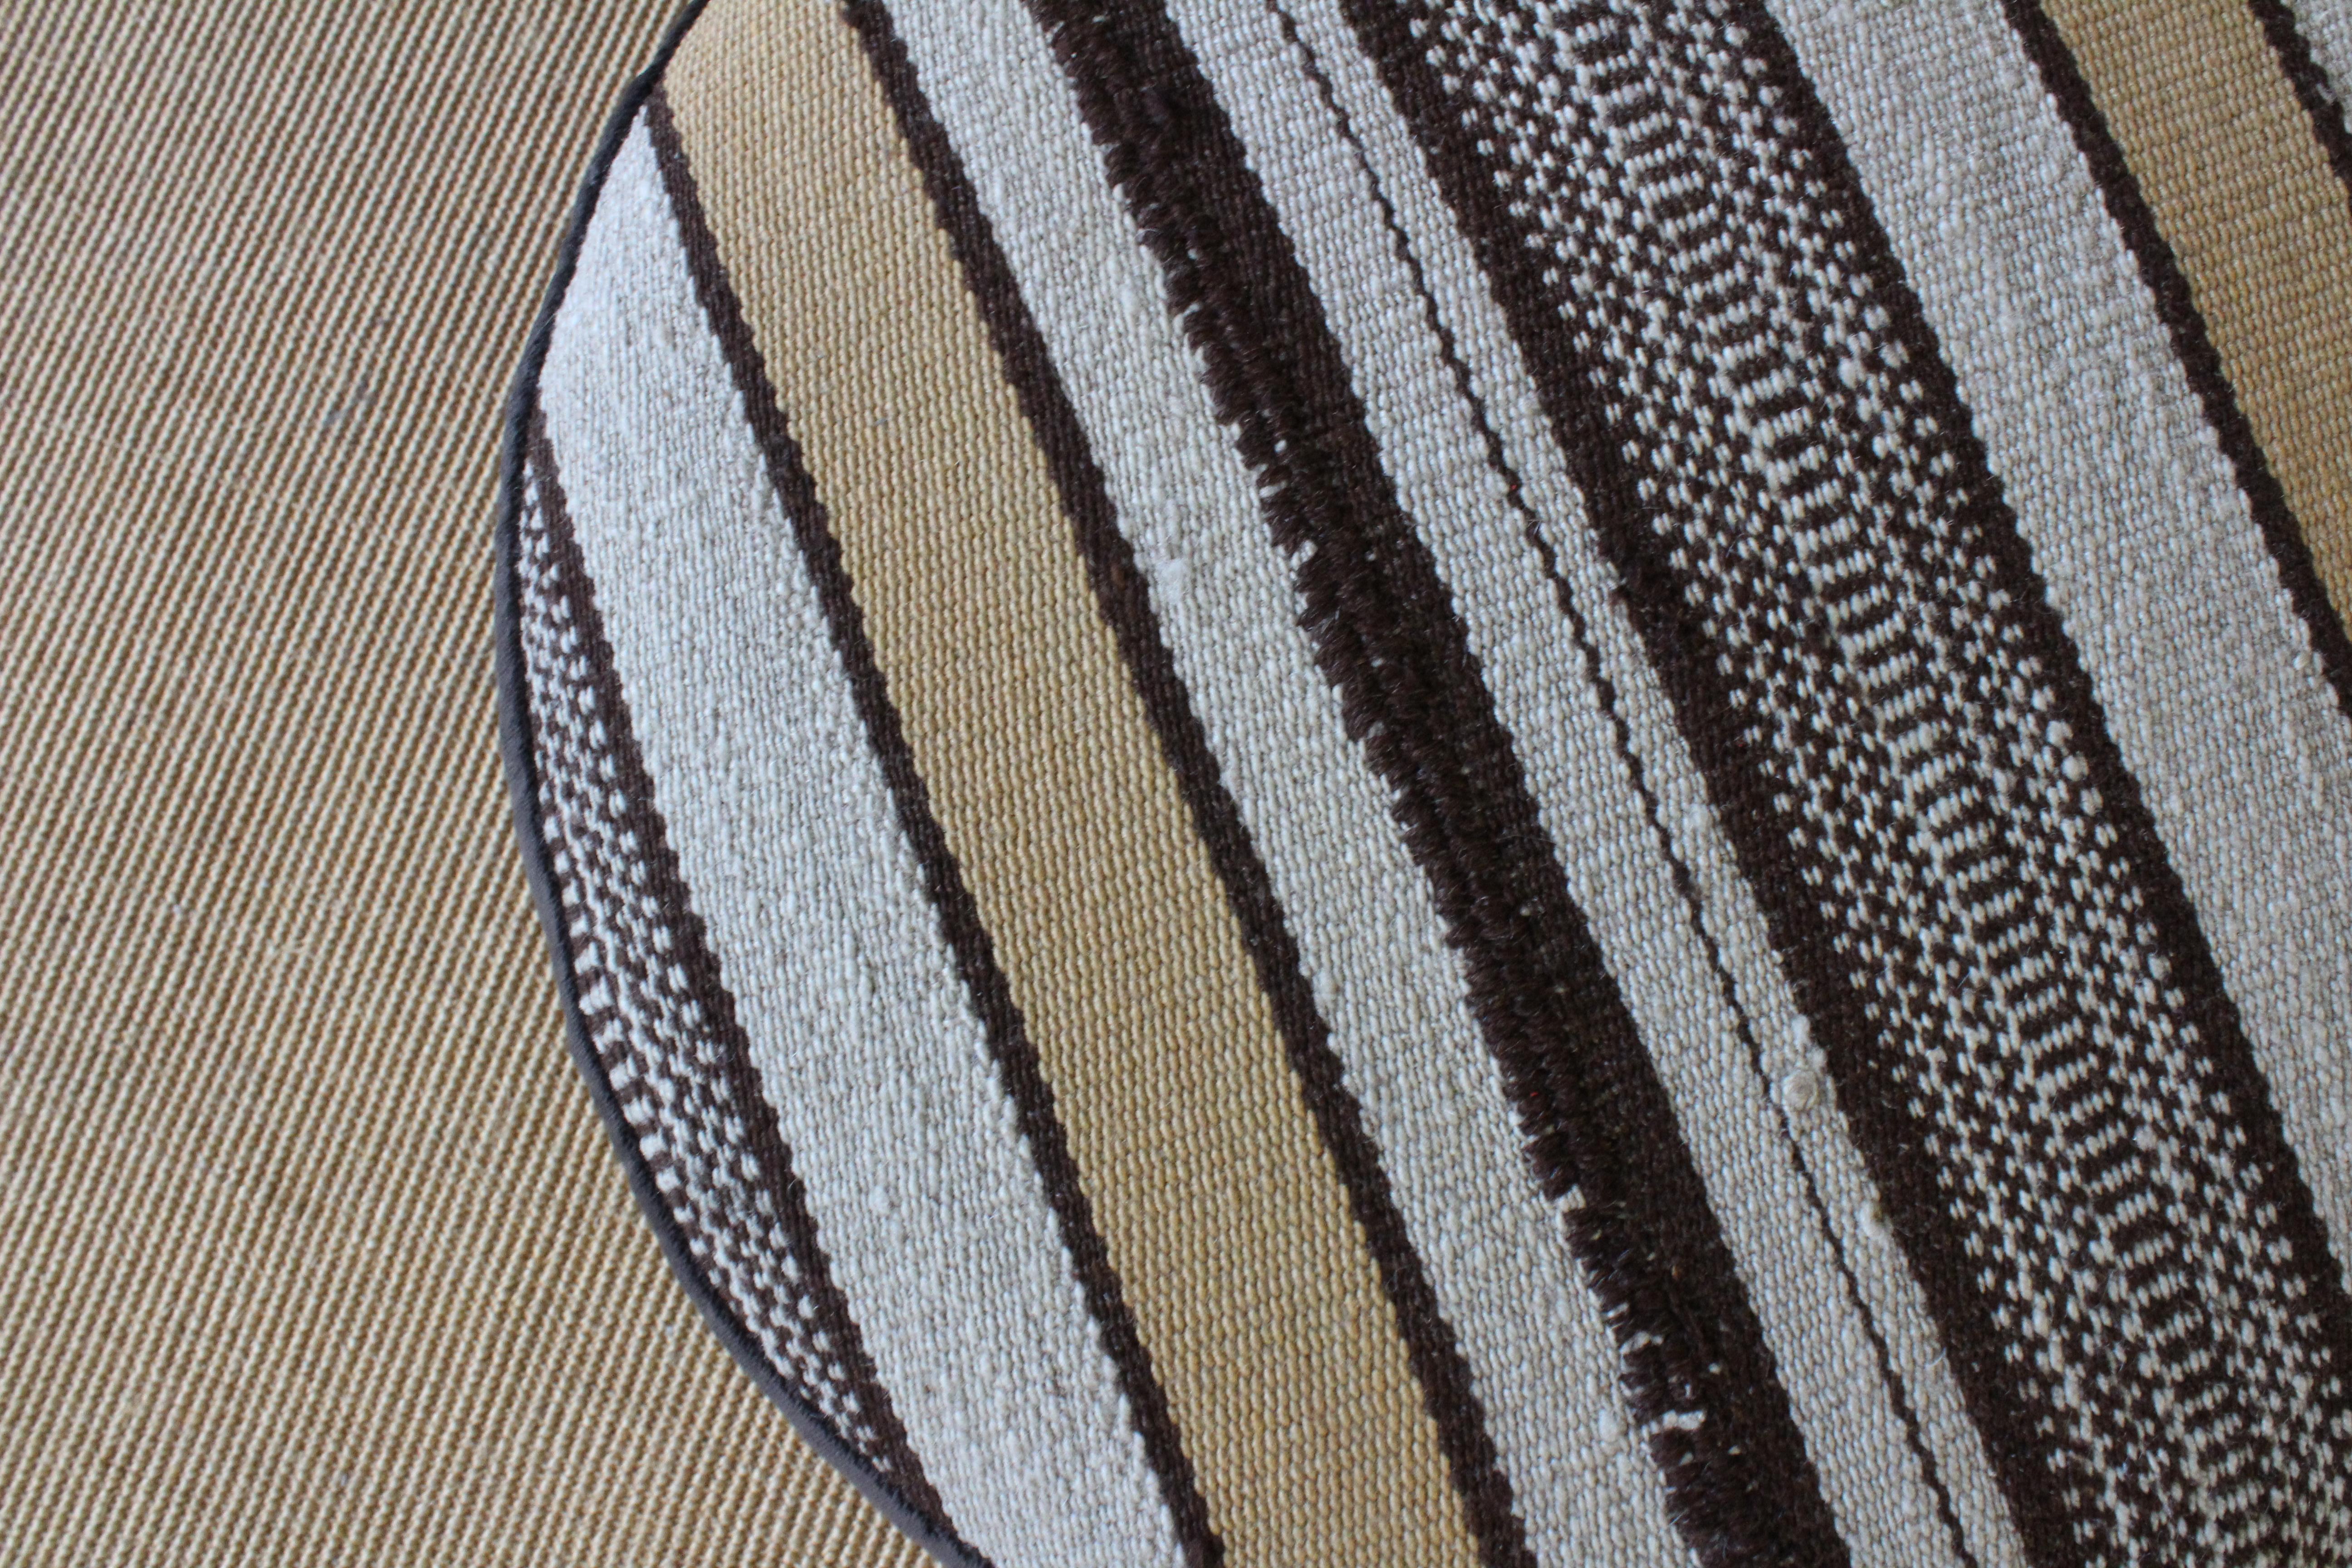 Velvet Upholstered Kilim Stools, Three Available. 